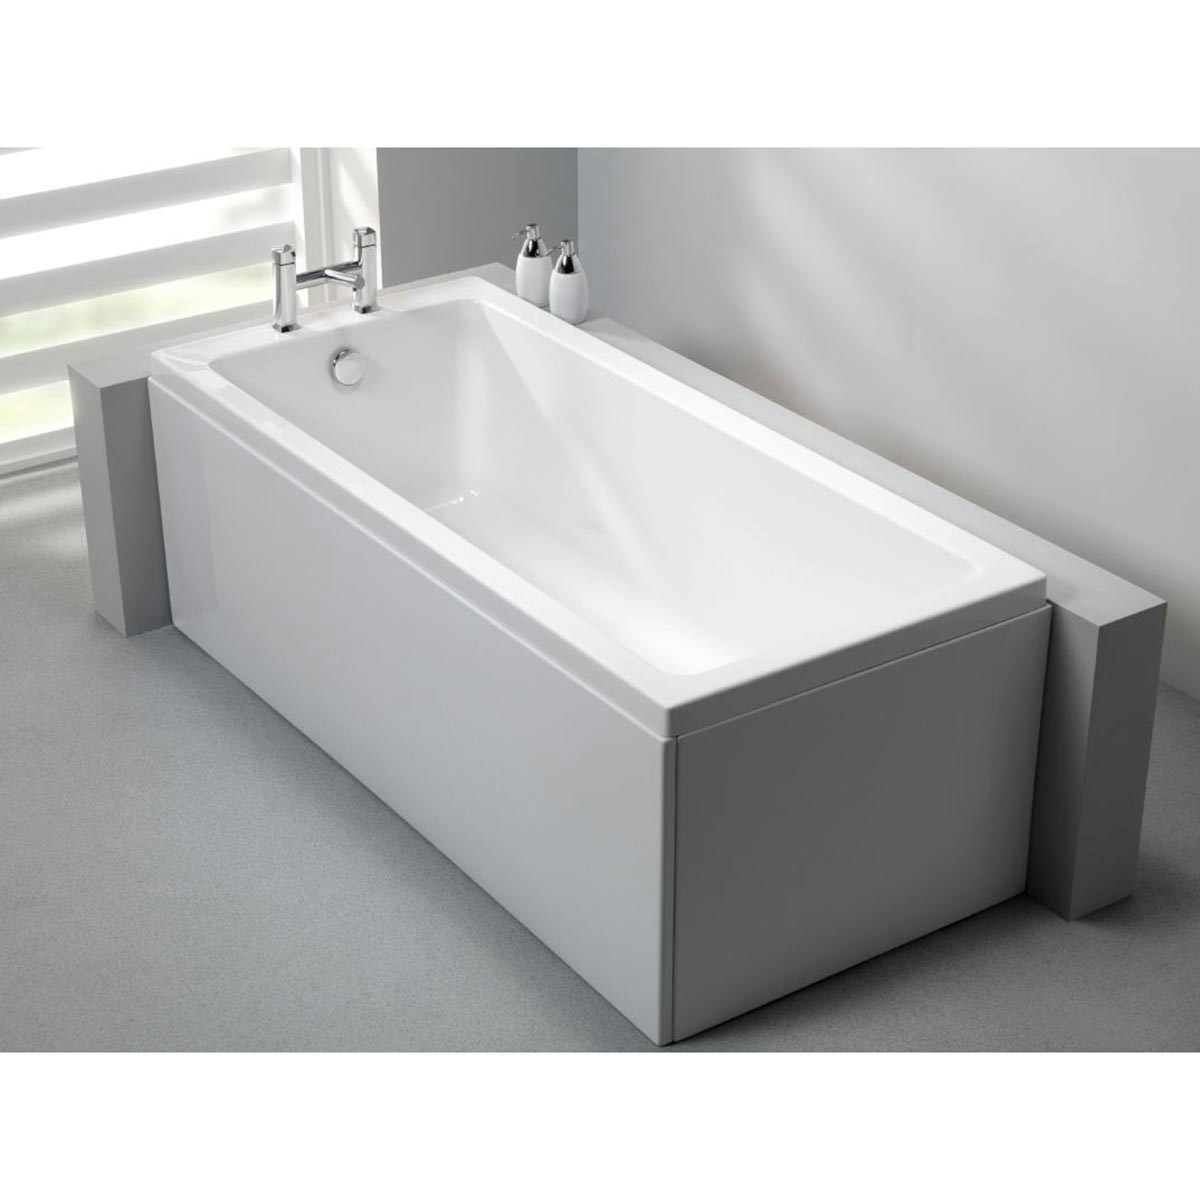 Carronite 5mm acrylic bath end panel 750 x 515